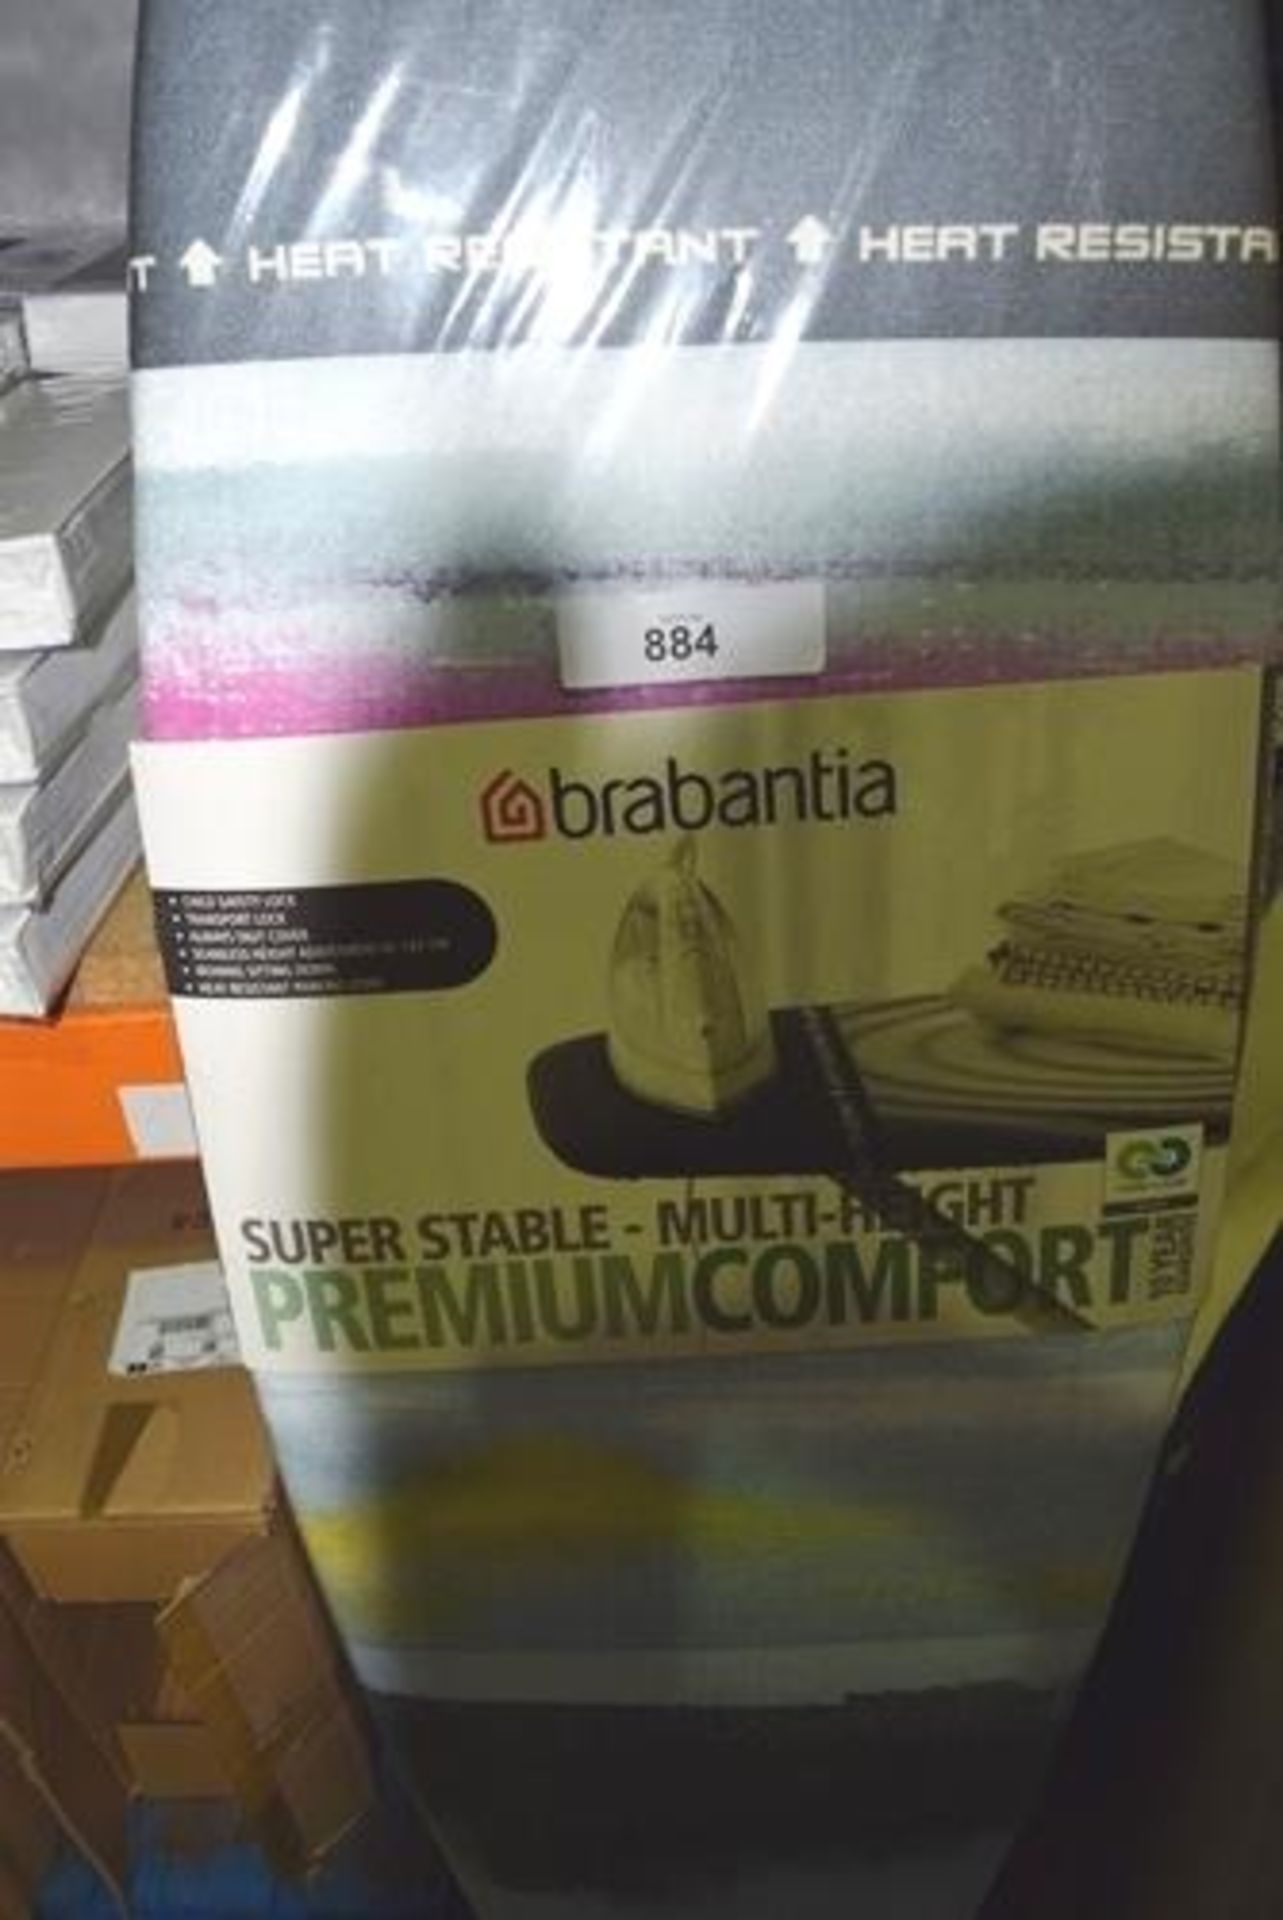 1 x Brabantia super stable multi height premium comfort morning breeze ironing board, code